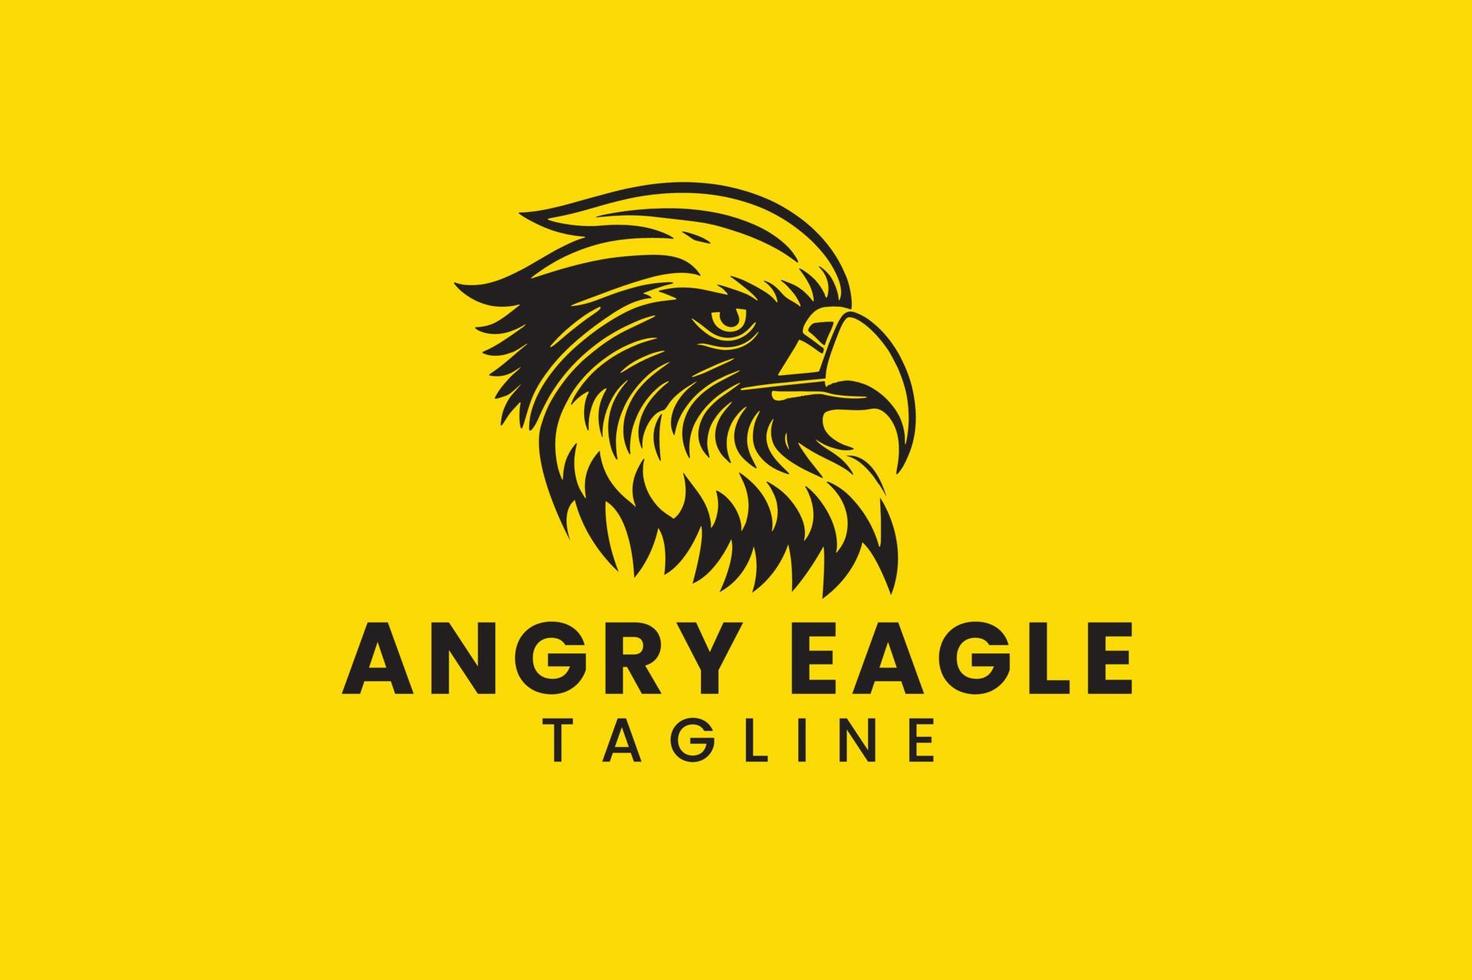 Eagle Head logo, angry eagle logo, minimal eagle logo, eagle face logo, creative eagle logo vector